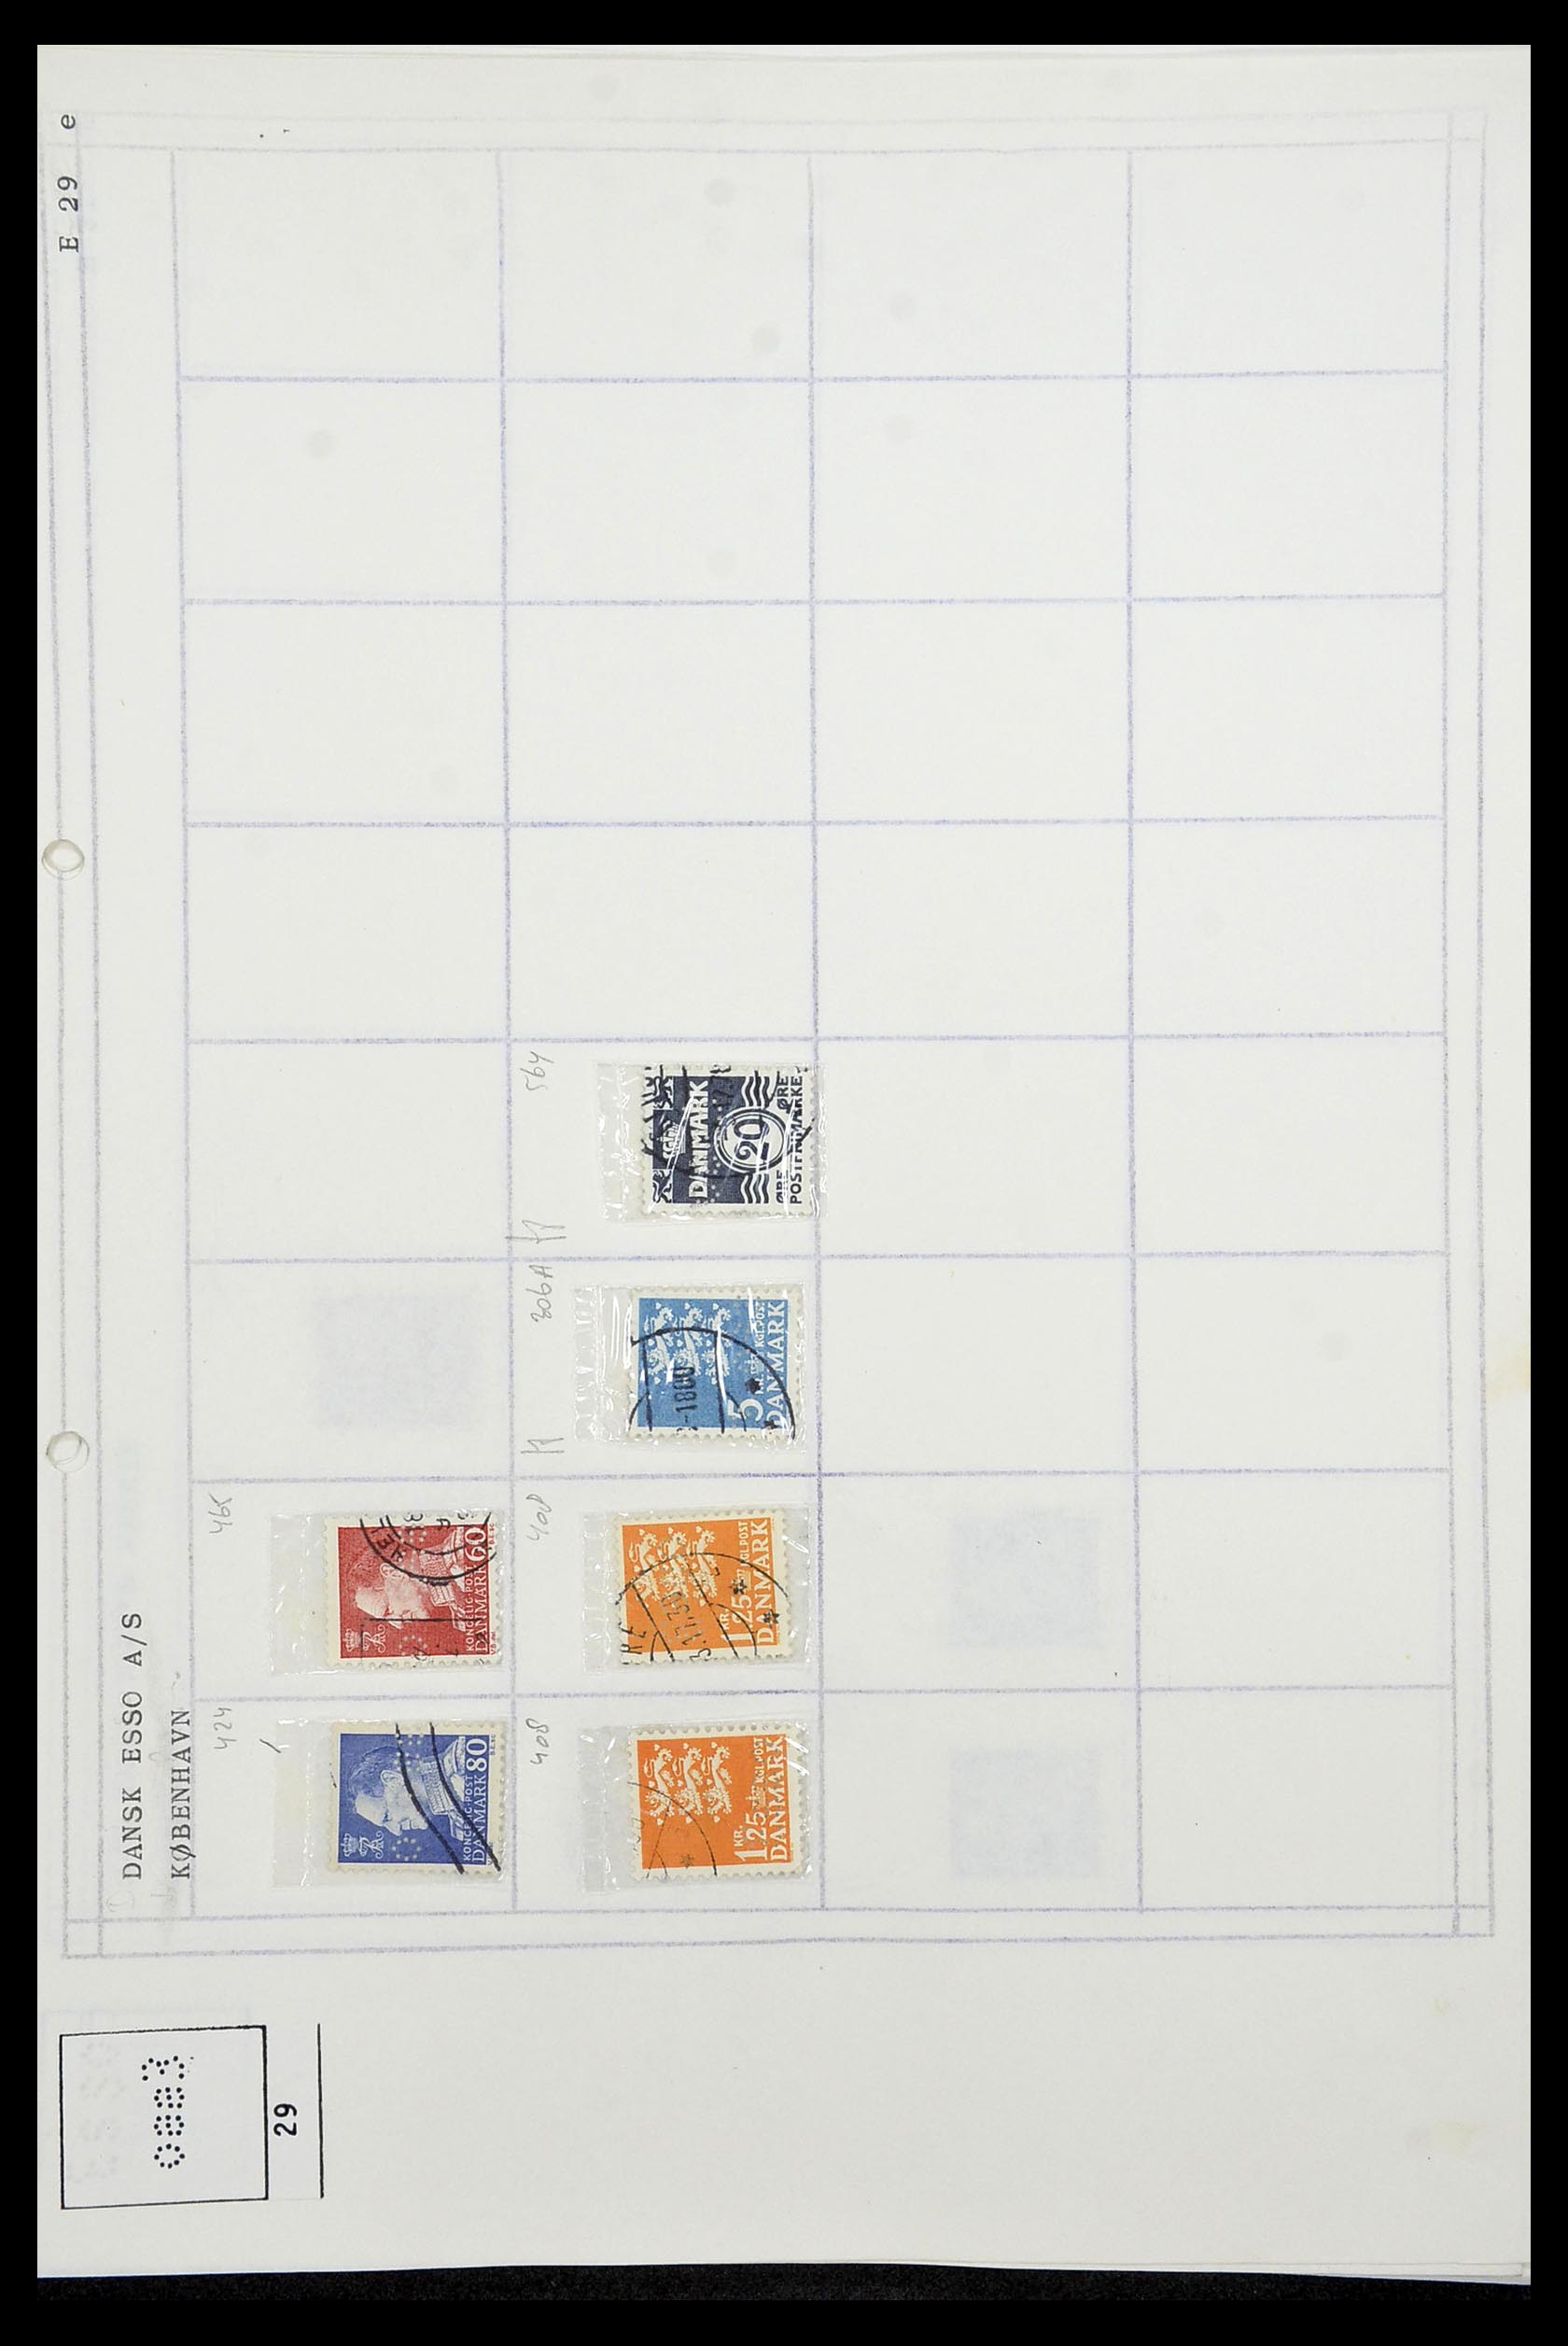 34415 087 - Stamp Collection 34415 Denmark perfins 1875-1980.